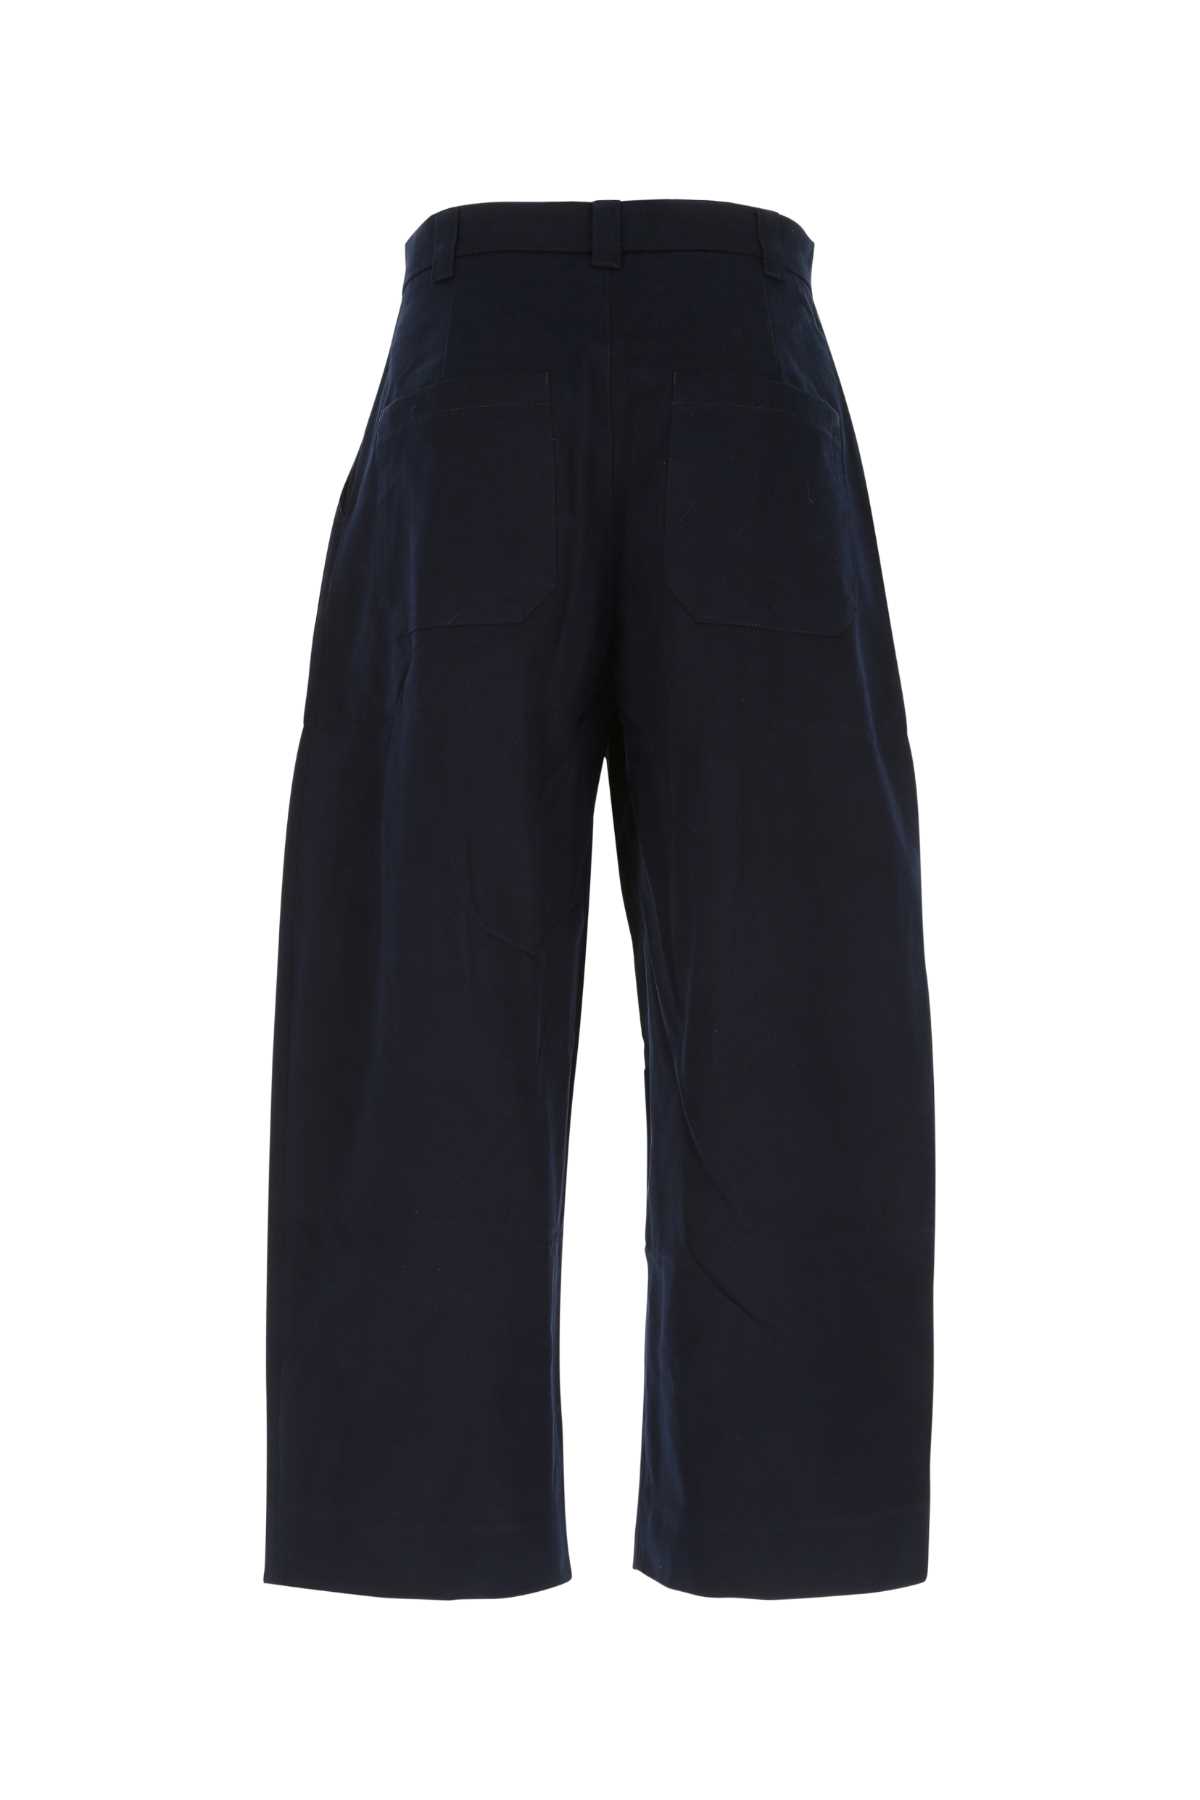 Studio Nicholson Navy Blue Cotton Sorte Pant In Black